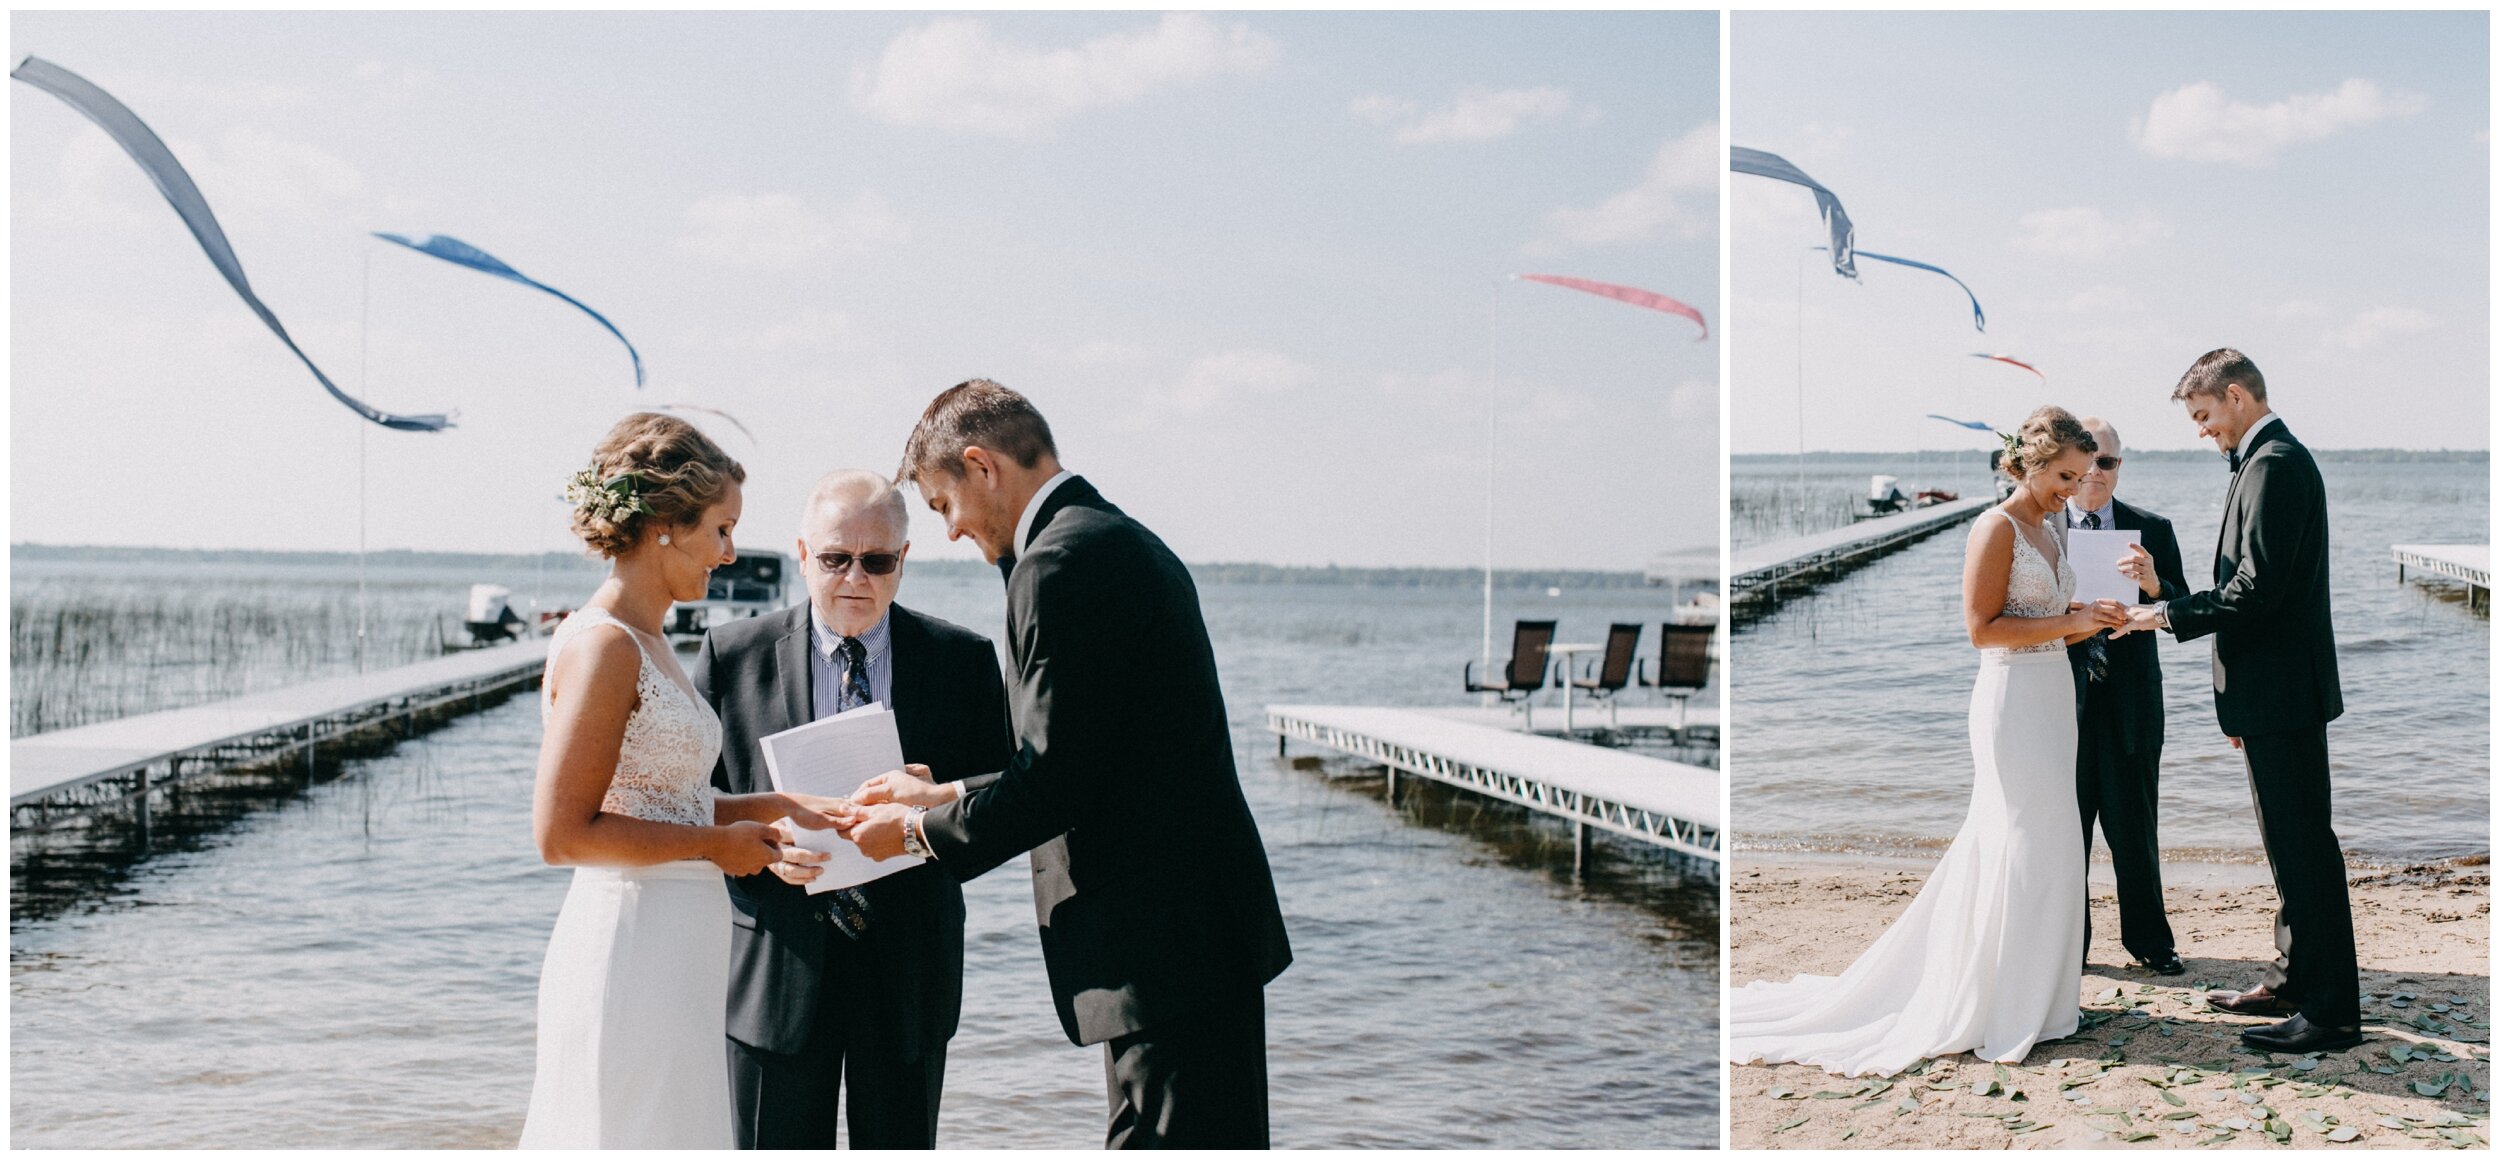 Bride and groom exchanging rings on beach during lakeside wedding in Brainerd, Minnesota